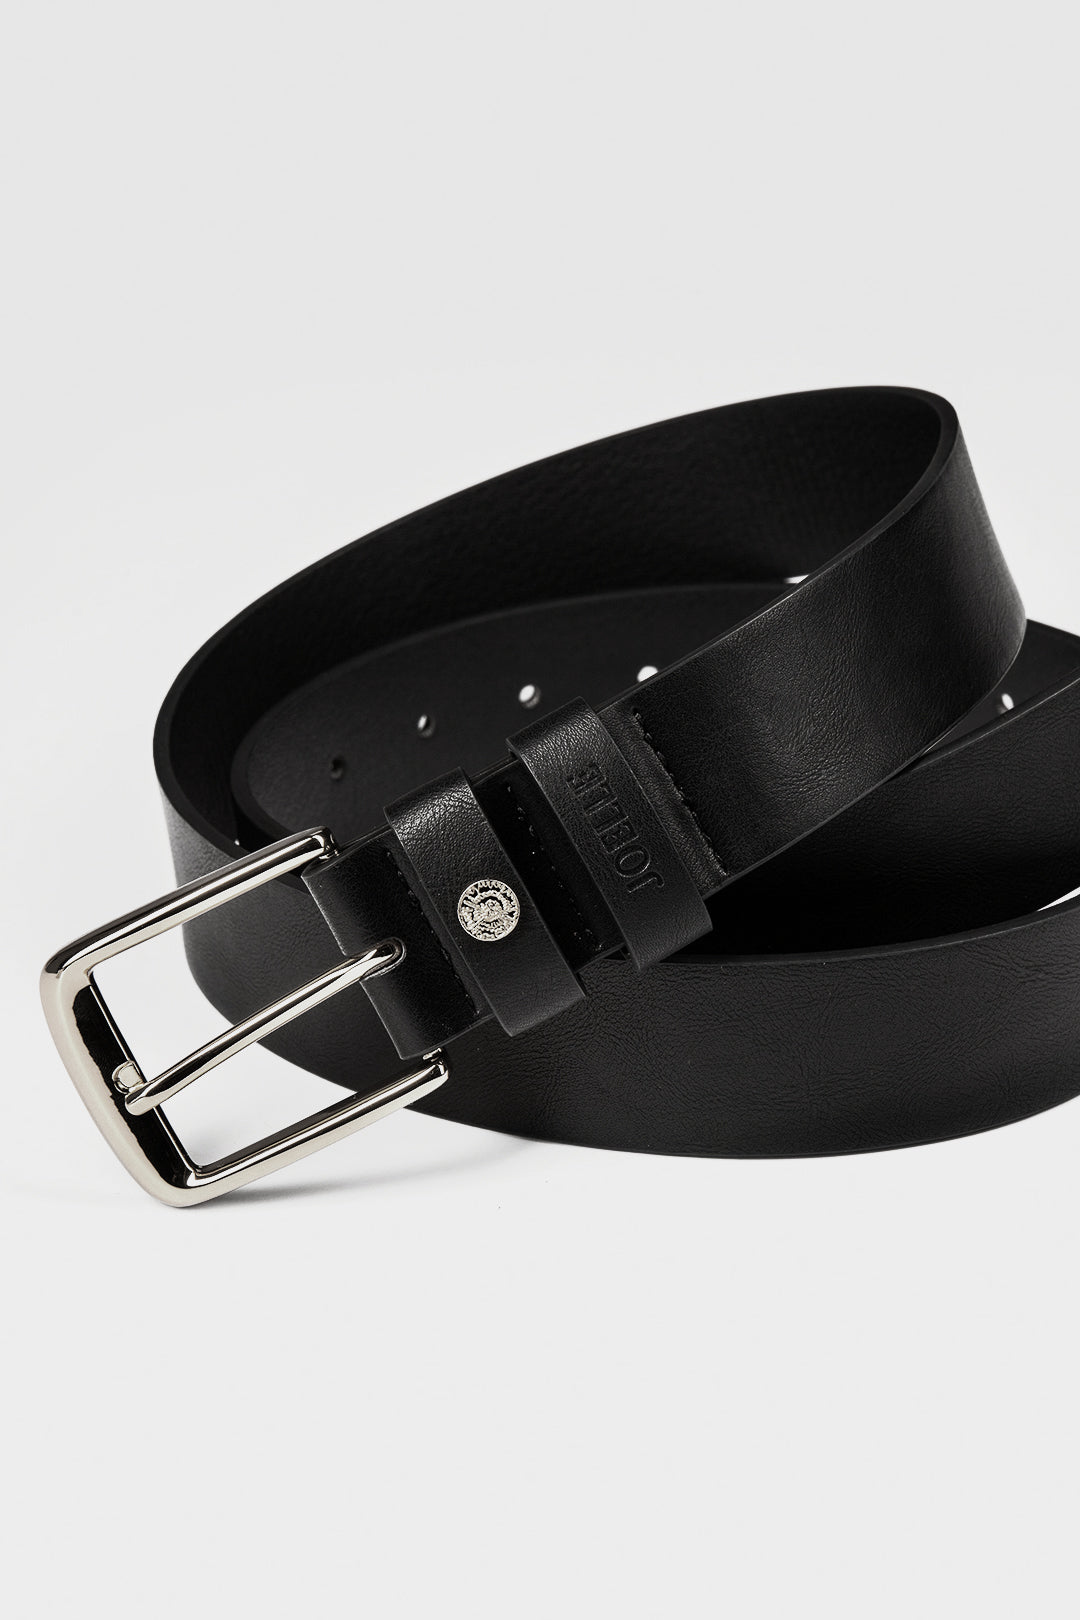 Black belt with silver buckle | Adrien